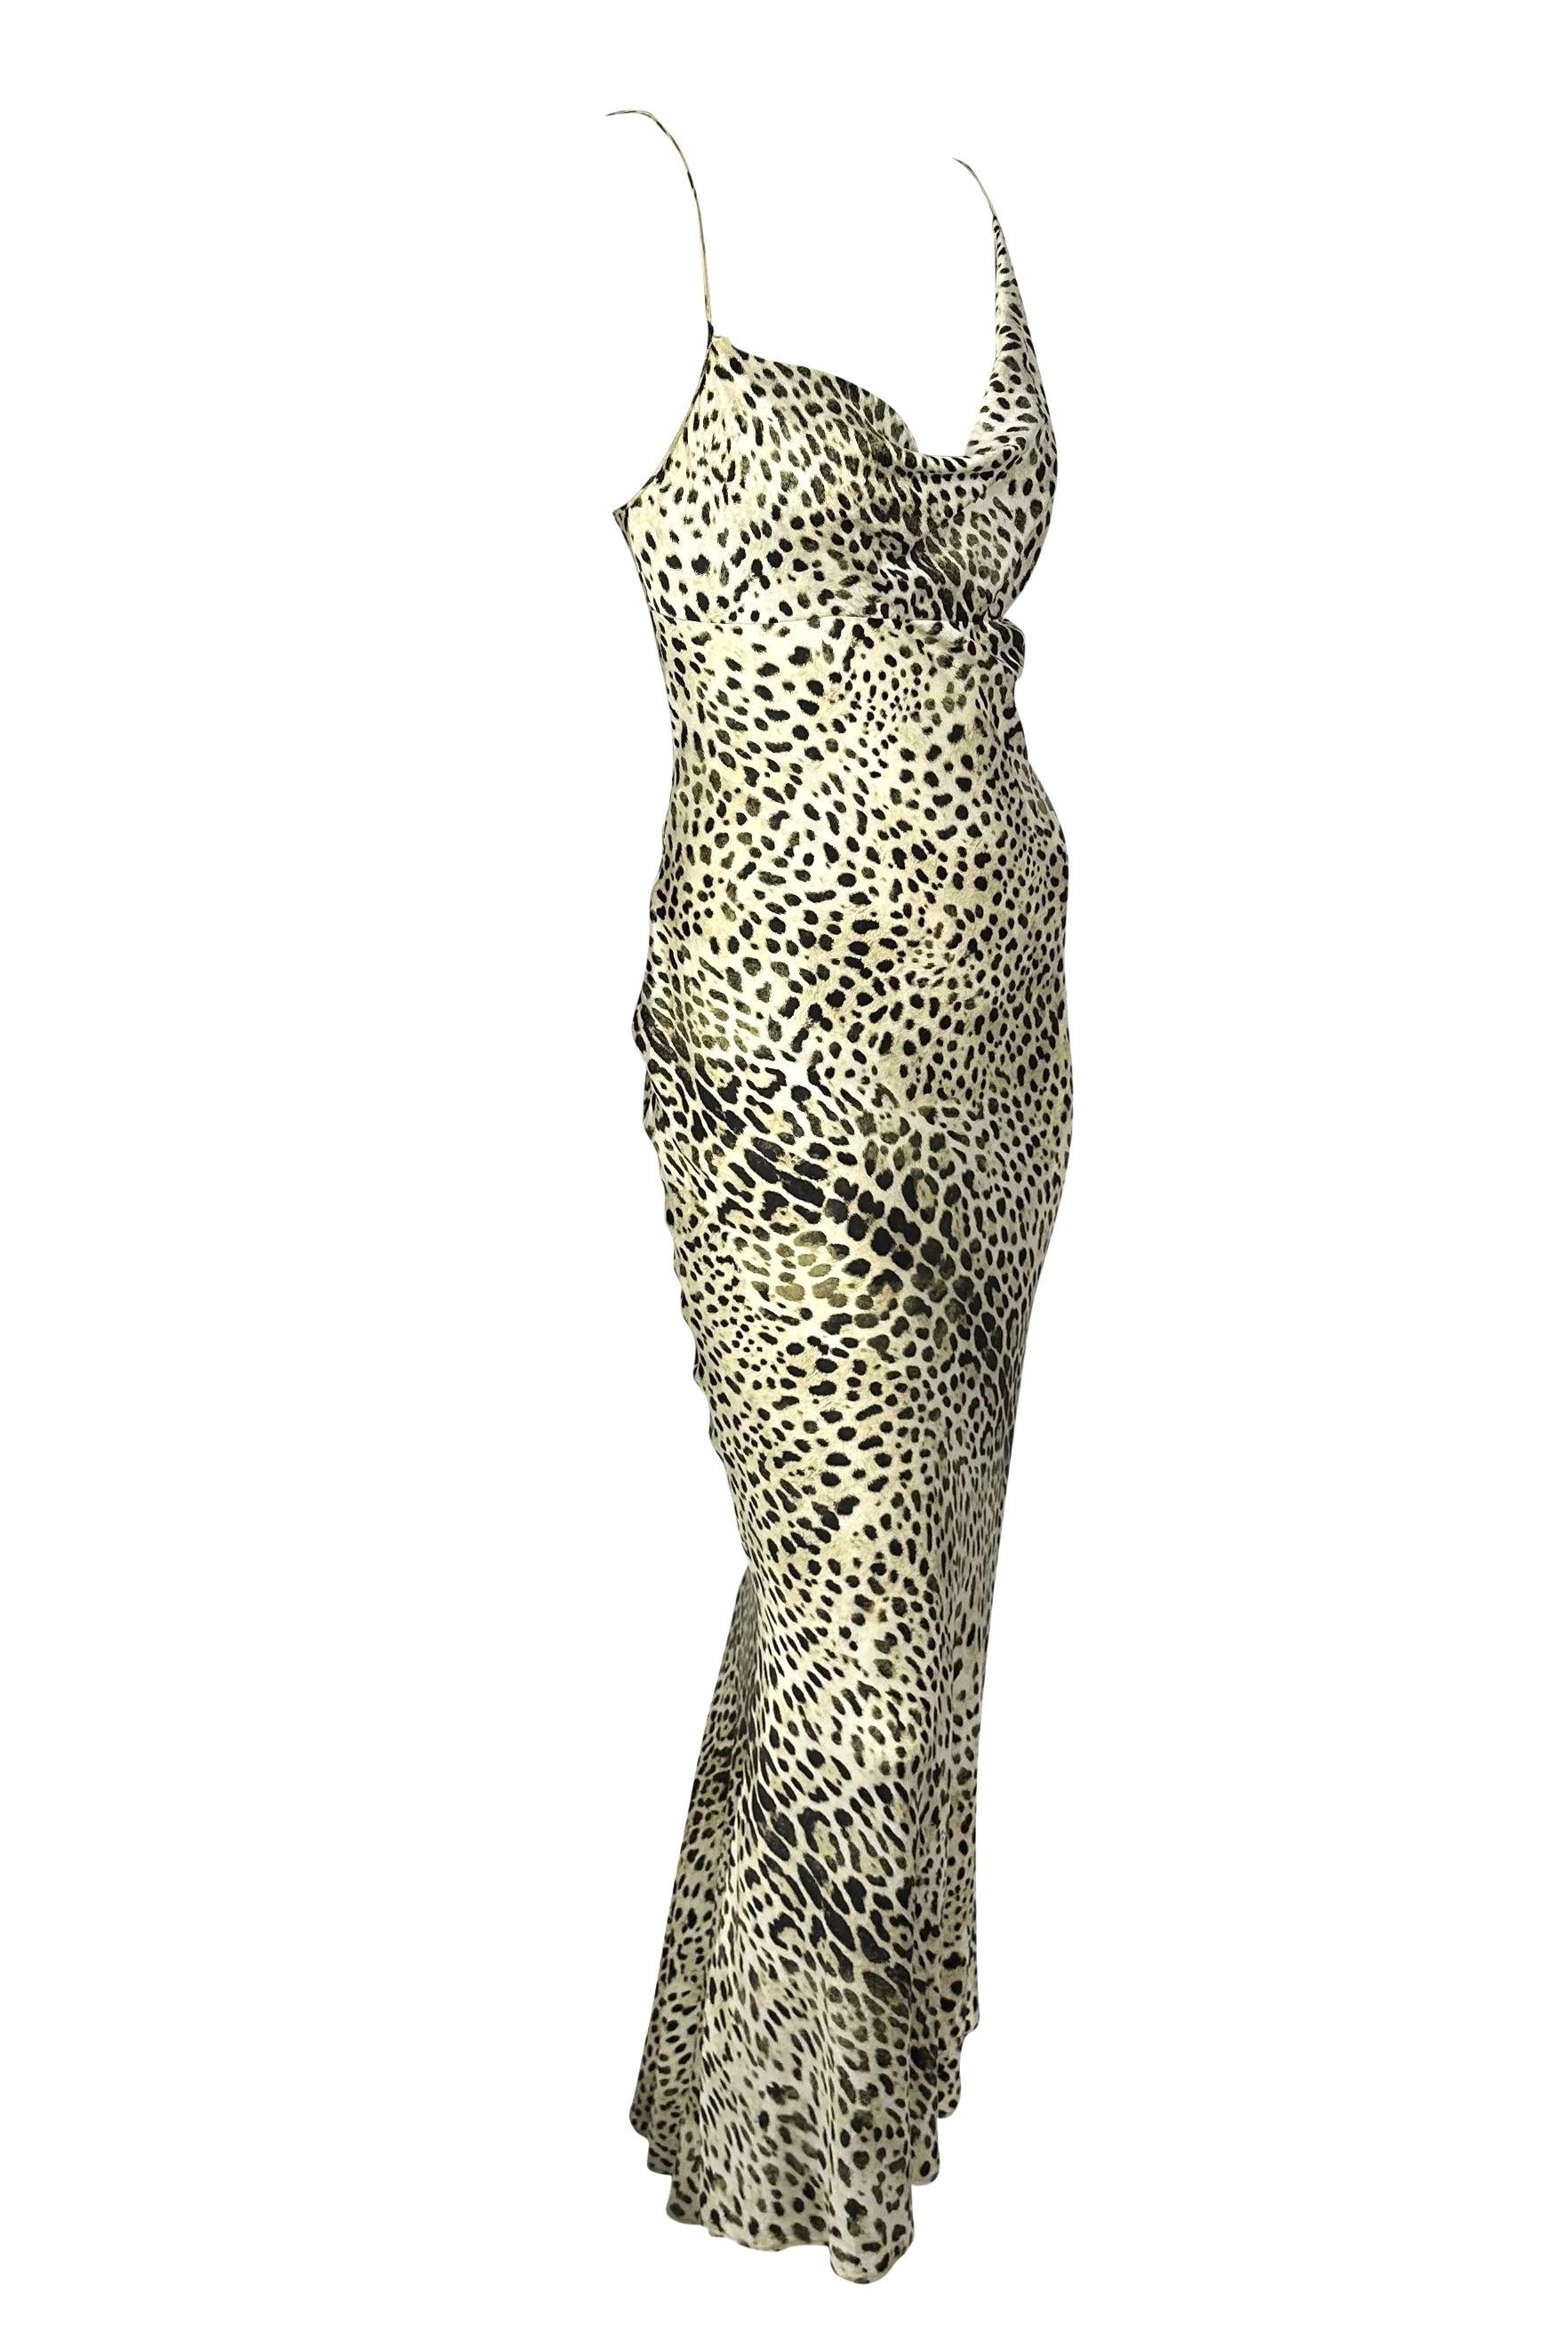 S/S 2001 Roberto Cavalli Animal Print Asymmetric Silk Bias Cut Gown For Sale 1